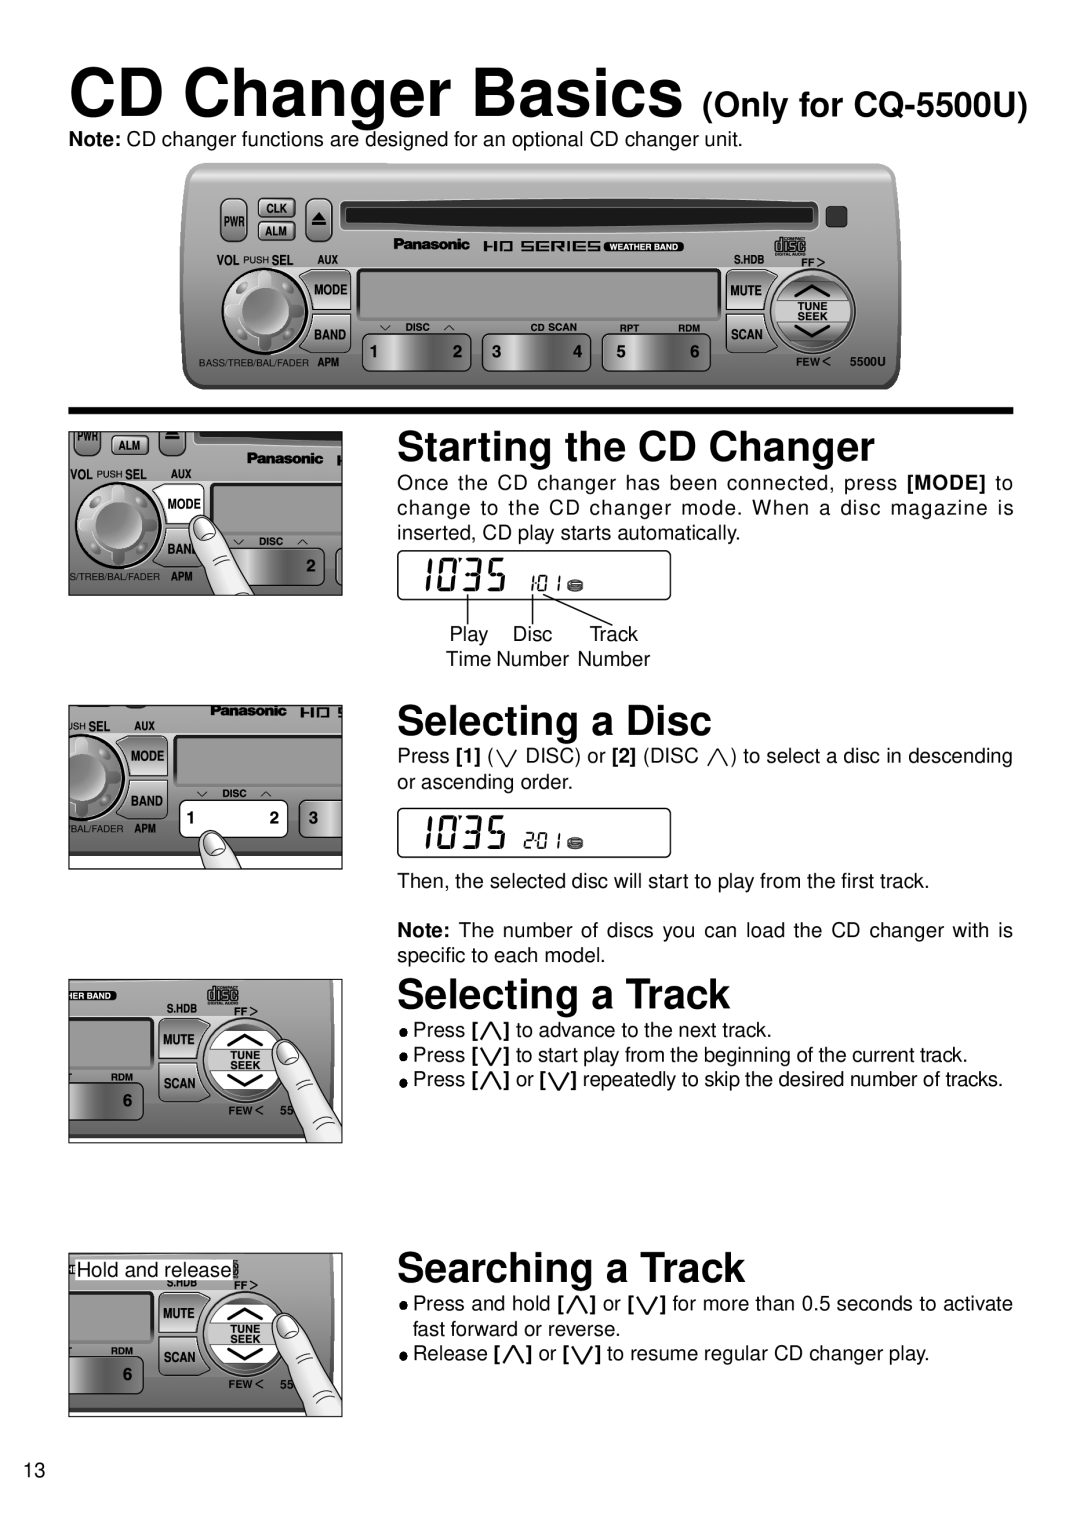 Panasonic 5300U manual Starting the CD Changer, Selecting a Disc, Selecting a Track, CD Changer Basics Only for CQ-5500U 